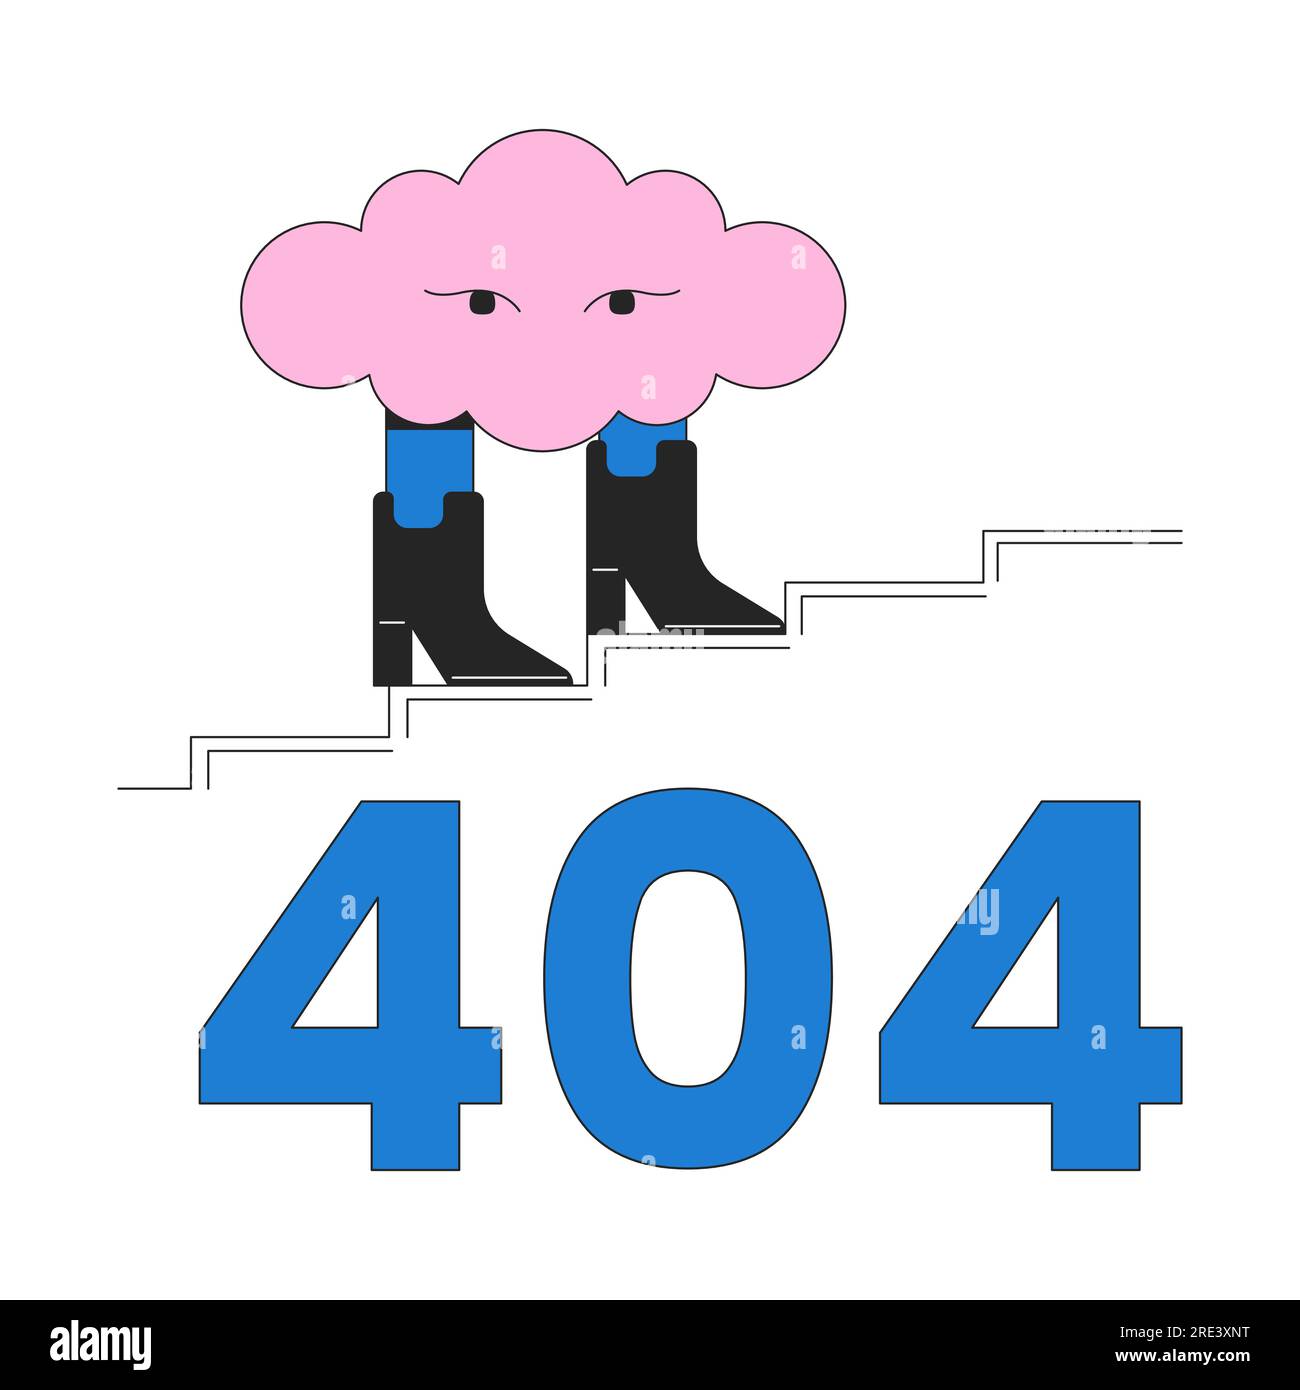 Surreal cloud walking in boots error 404 flash message Stock Vector